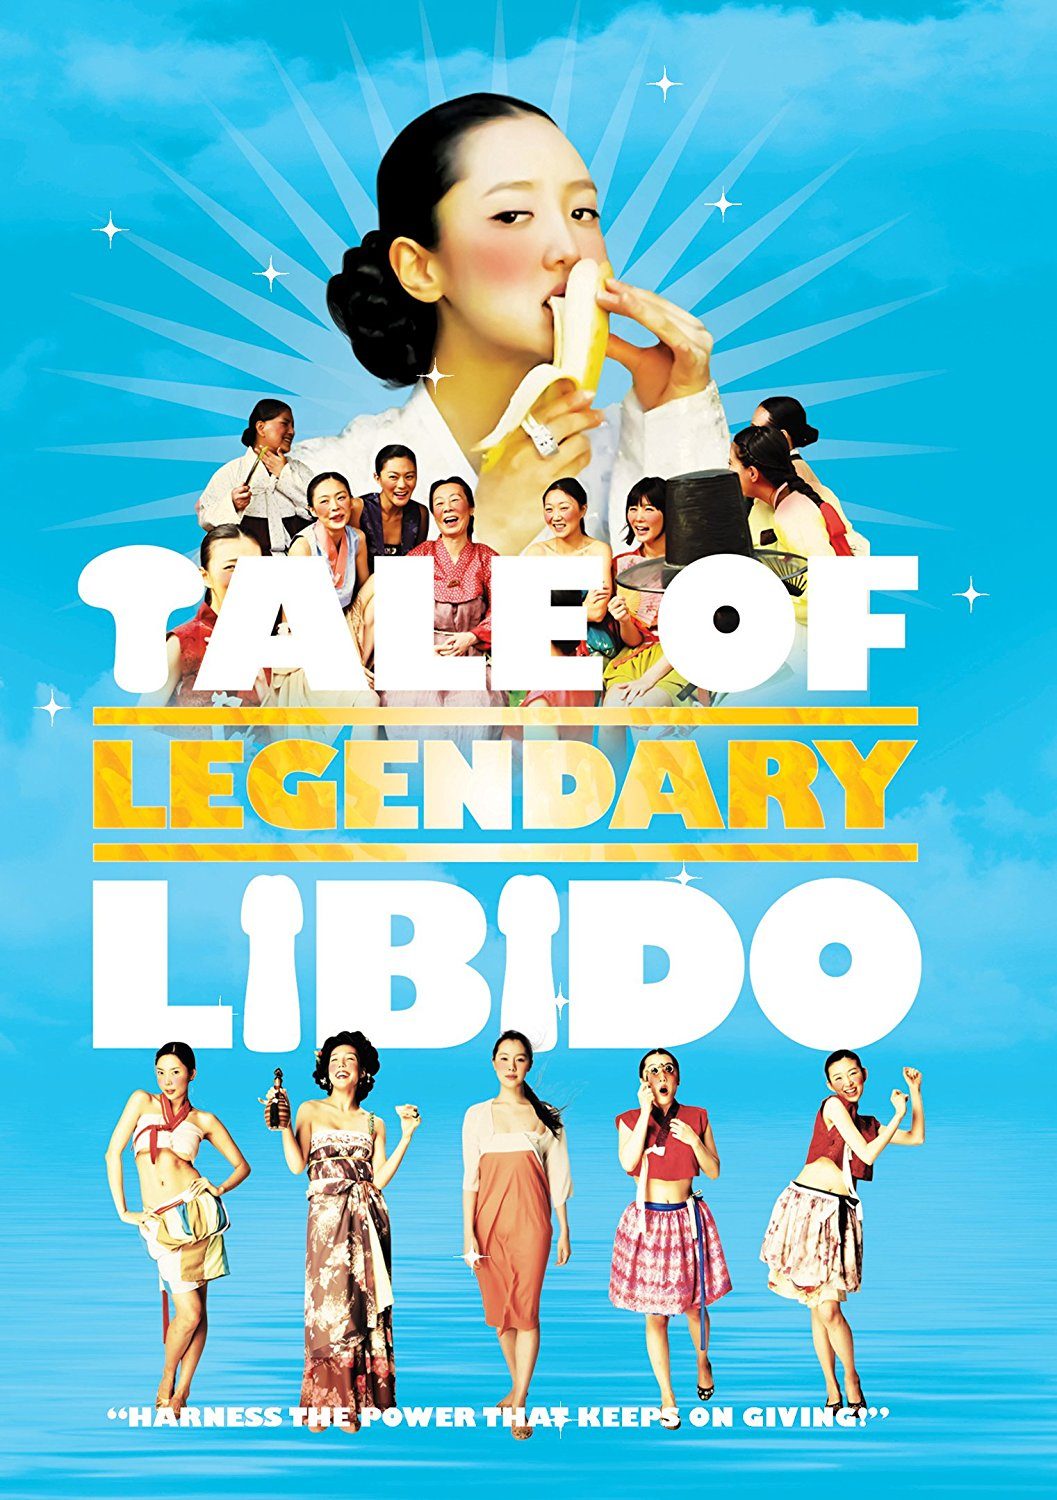 A tale legendary libido full movie